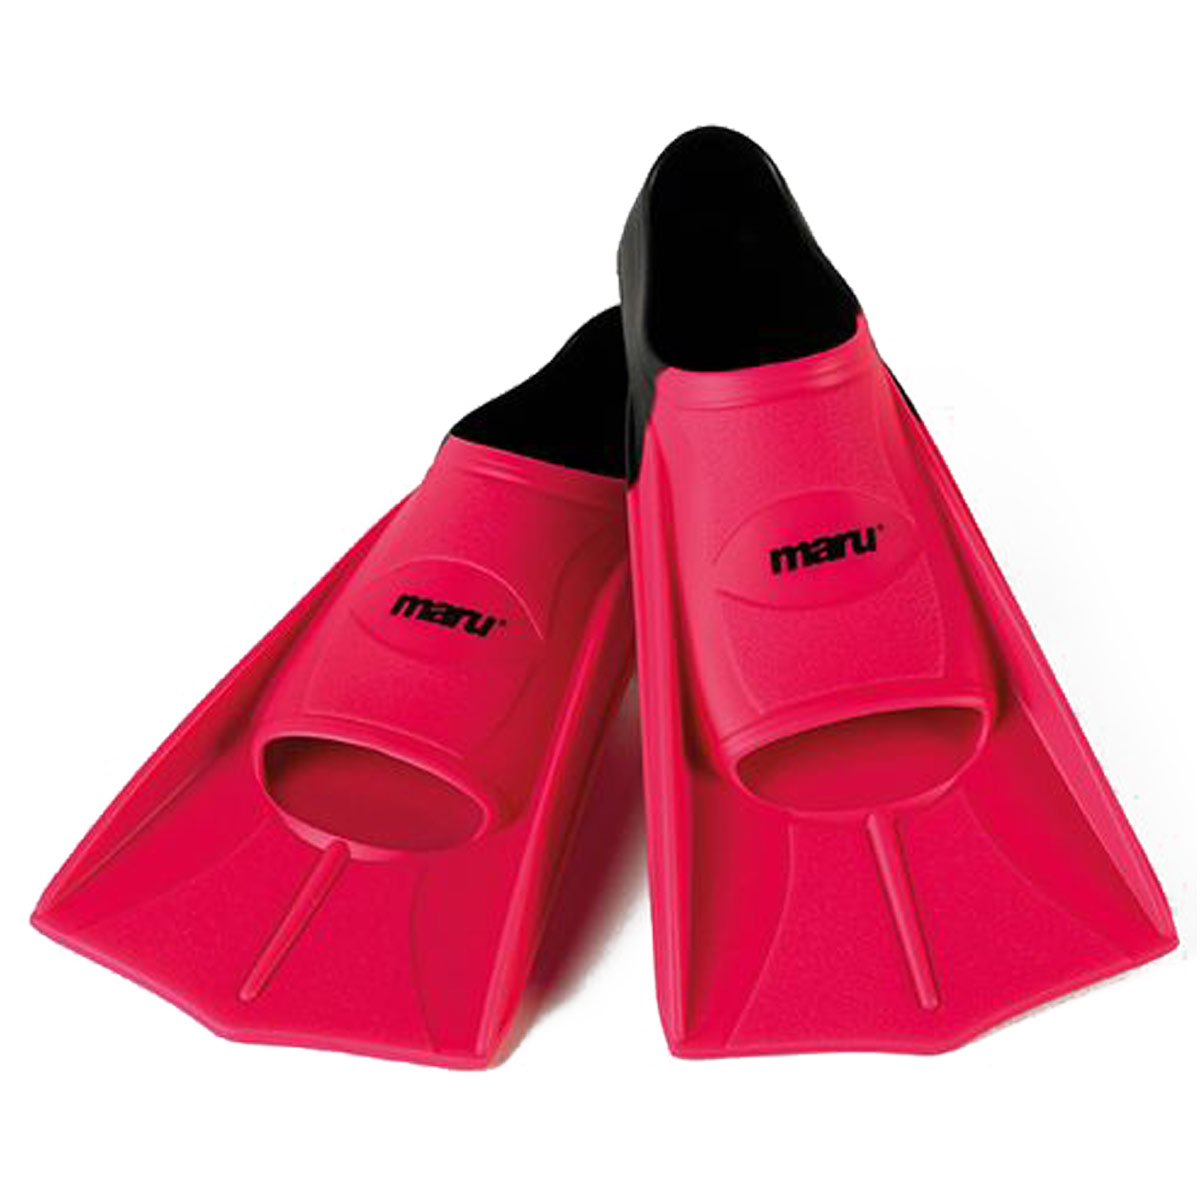 Maru Training Aid Fins - Neon Pink/Black